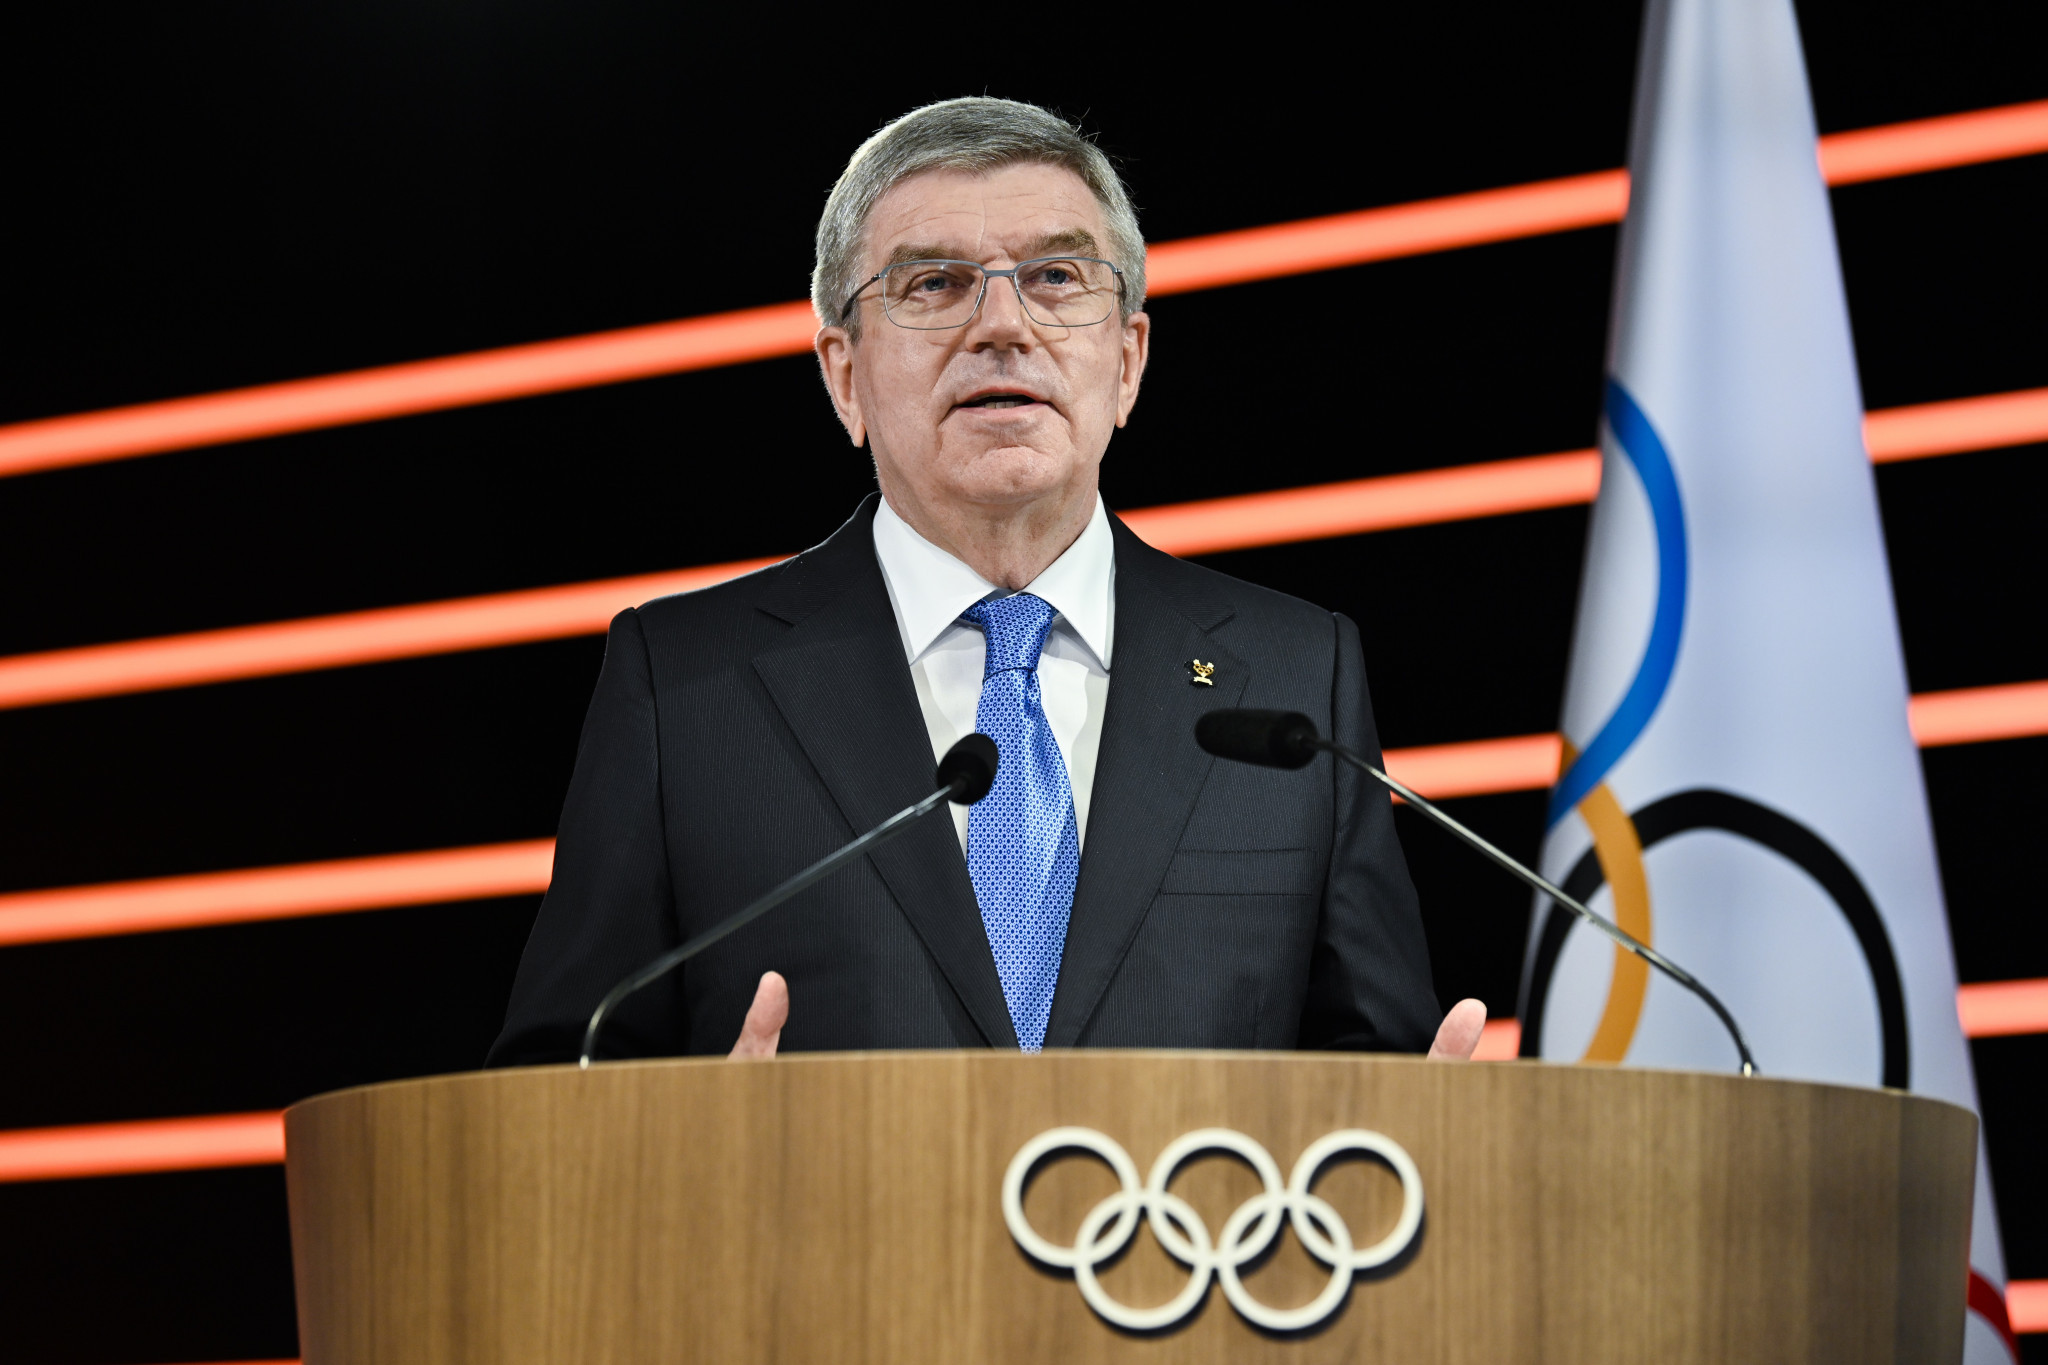 IOC President Thomas Bach raised question marks over IBA's governance ©IOC